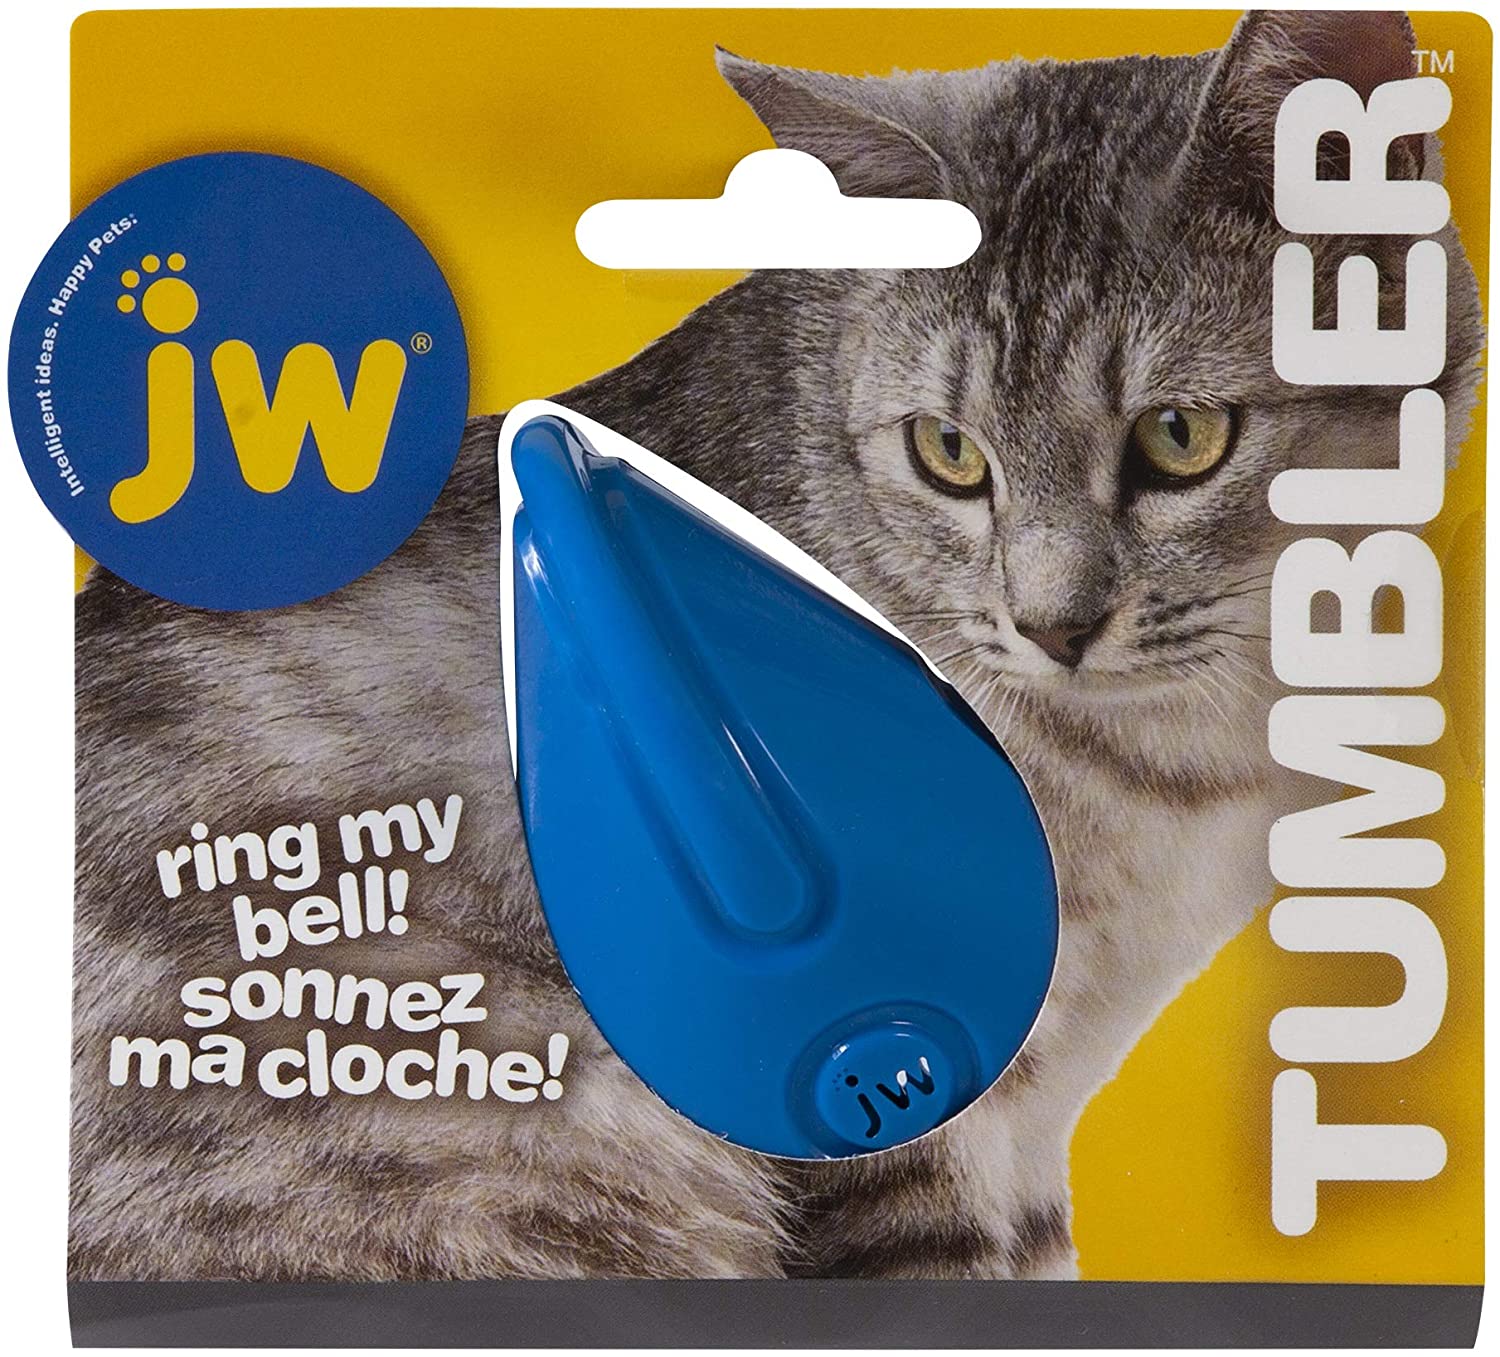 Jw Cat Tumbler Toy